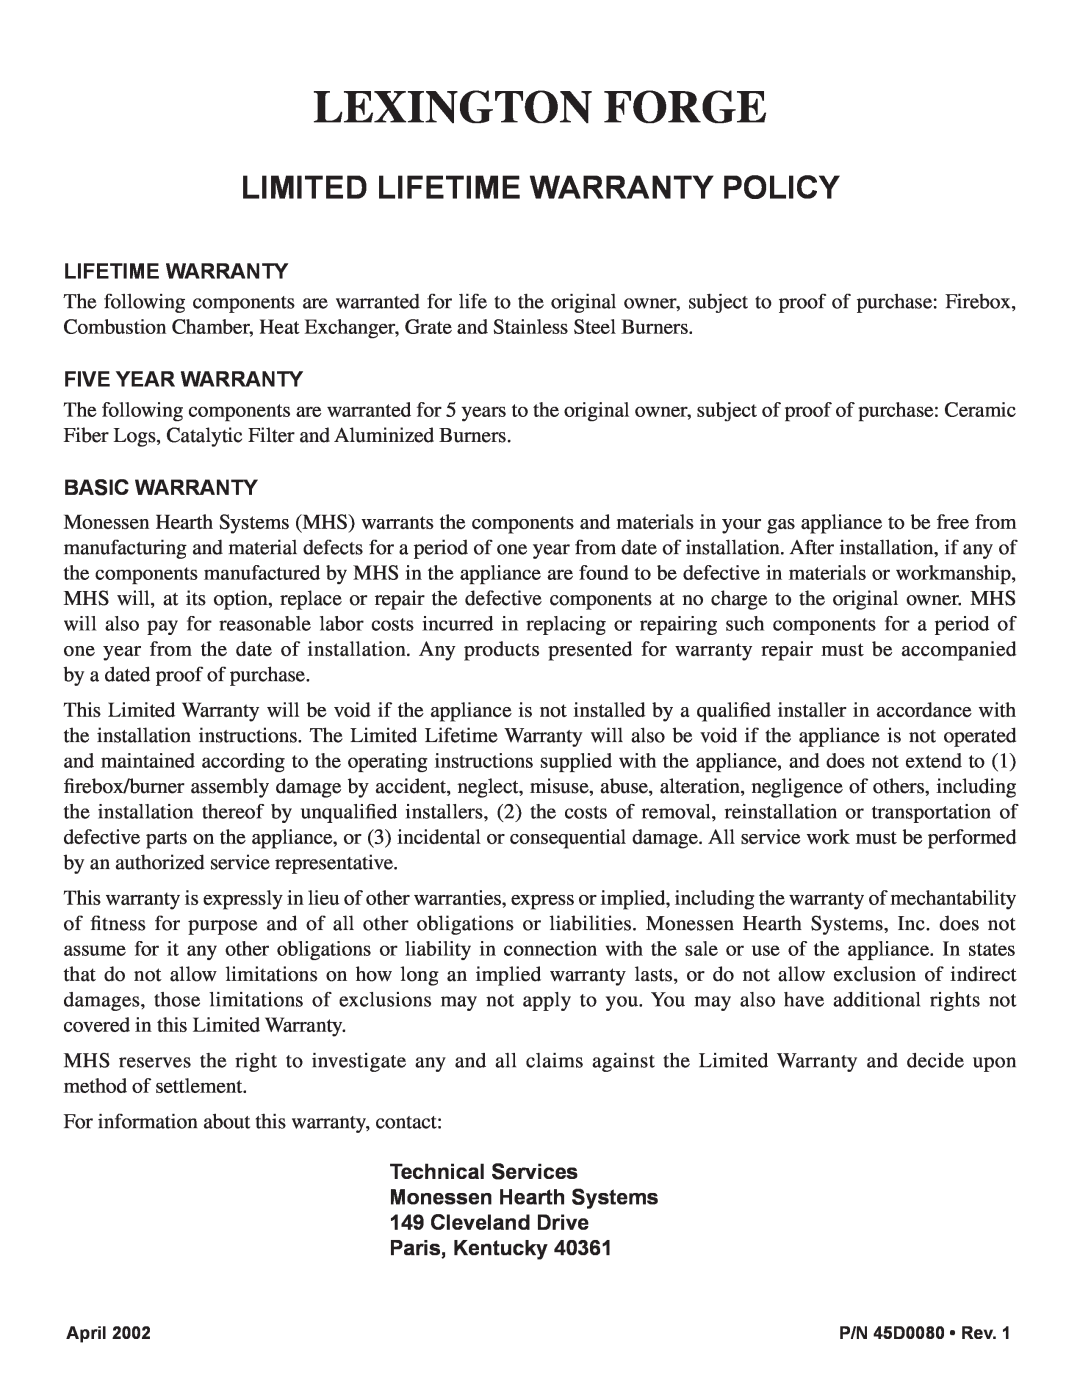 Monessen Hearth C2804VF, C2802VF Limited Lifetime Warranty Policy, Five Year Warranty, Basic Warranty, Lexington Forge 